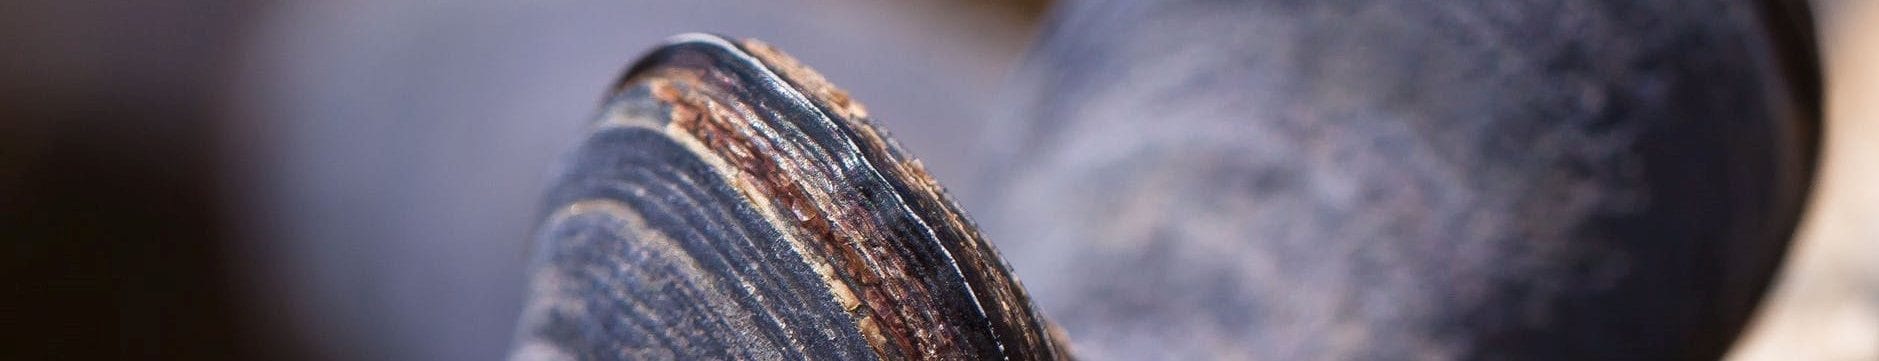 mussels-shells-mytilus-watt-area-53131-e1612759811327